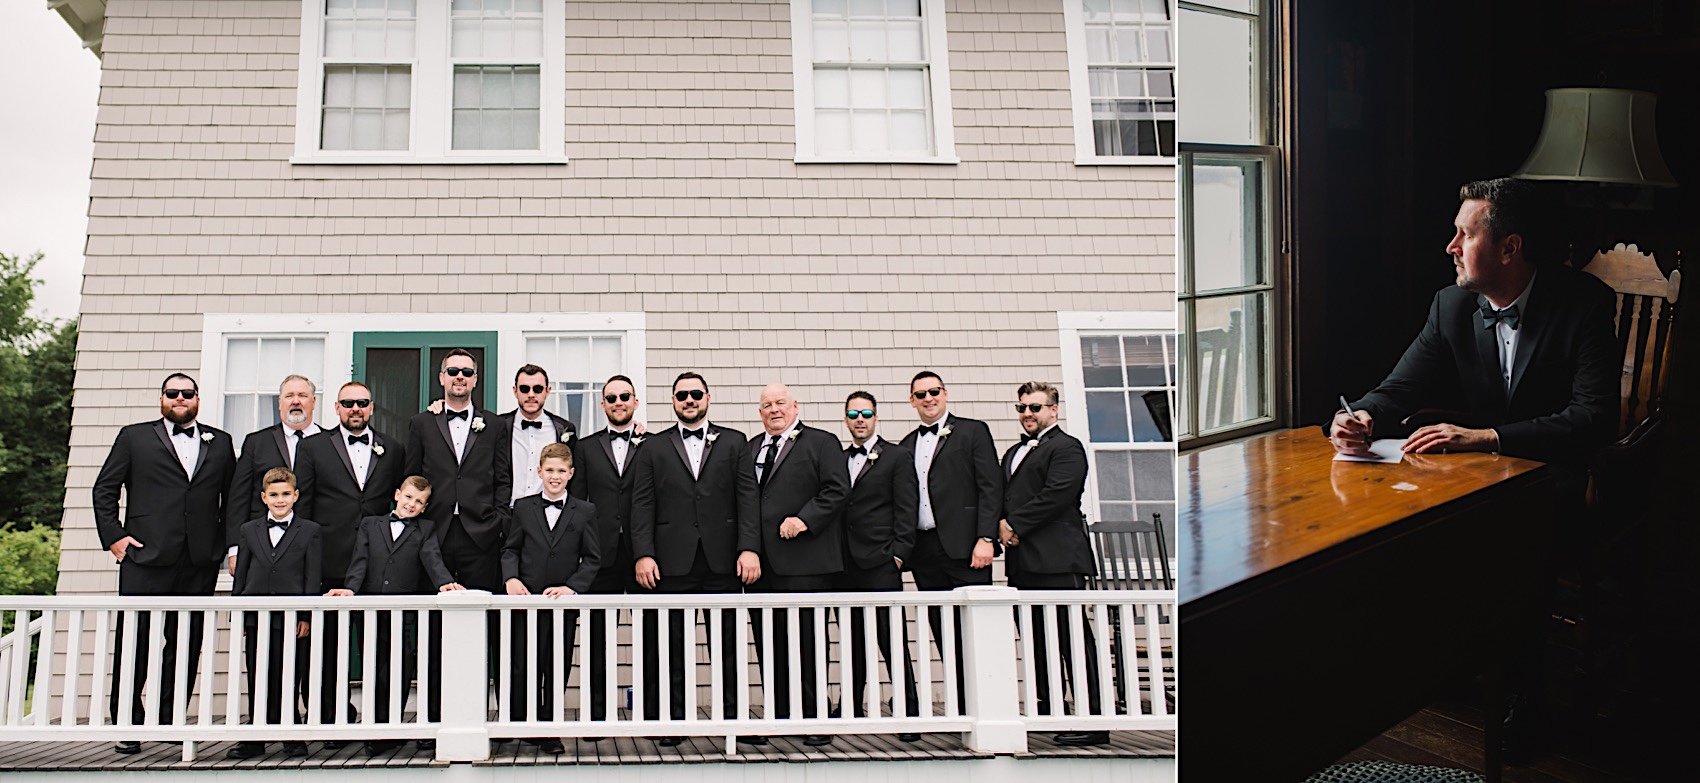 09_Plimoth patuxet plymouth massachusetts wedding photographer cape cod boston.jpg